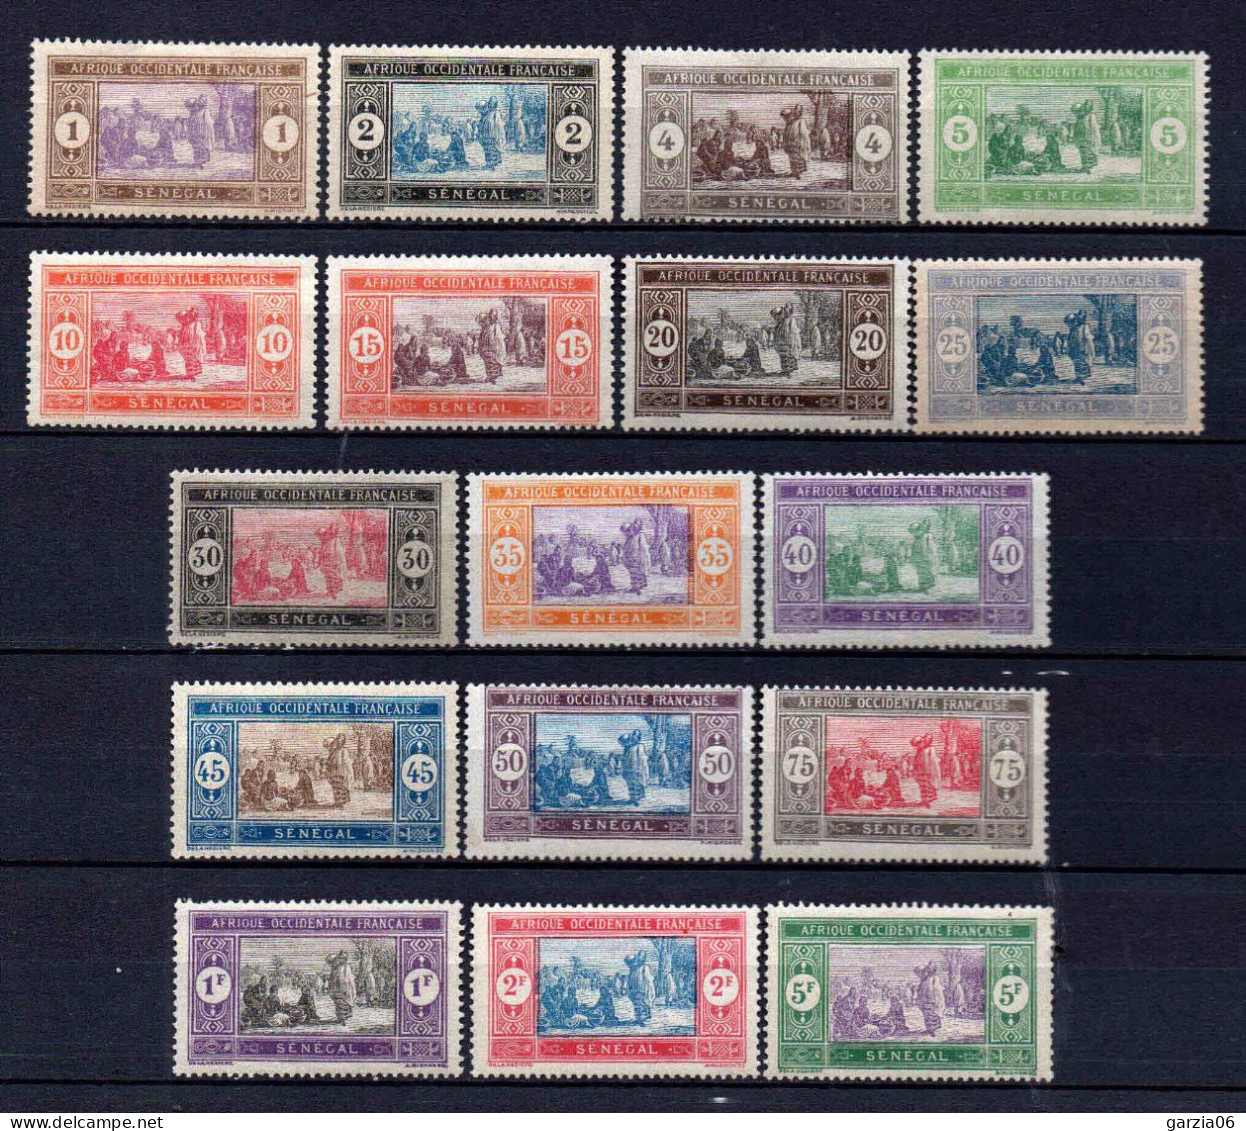 Sénégal  - 1914 - Marché Indigène  -  N° 53 à 69 -  Neufs * - MLH - Unused Stamps